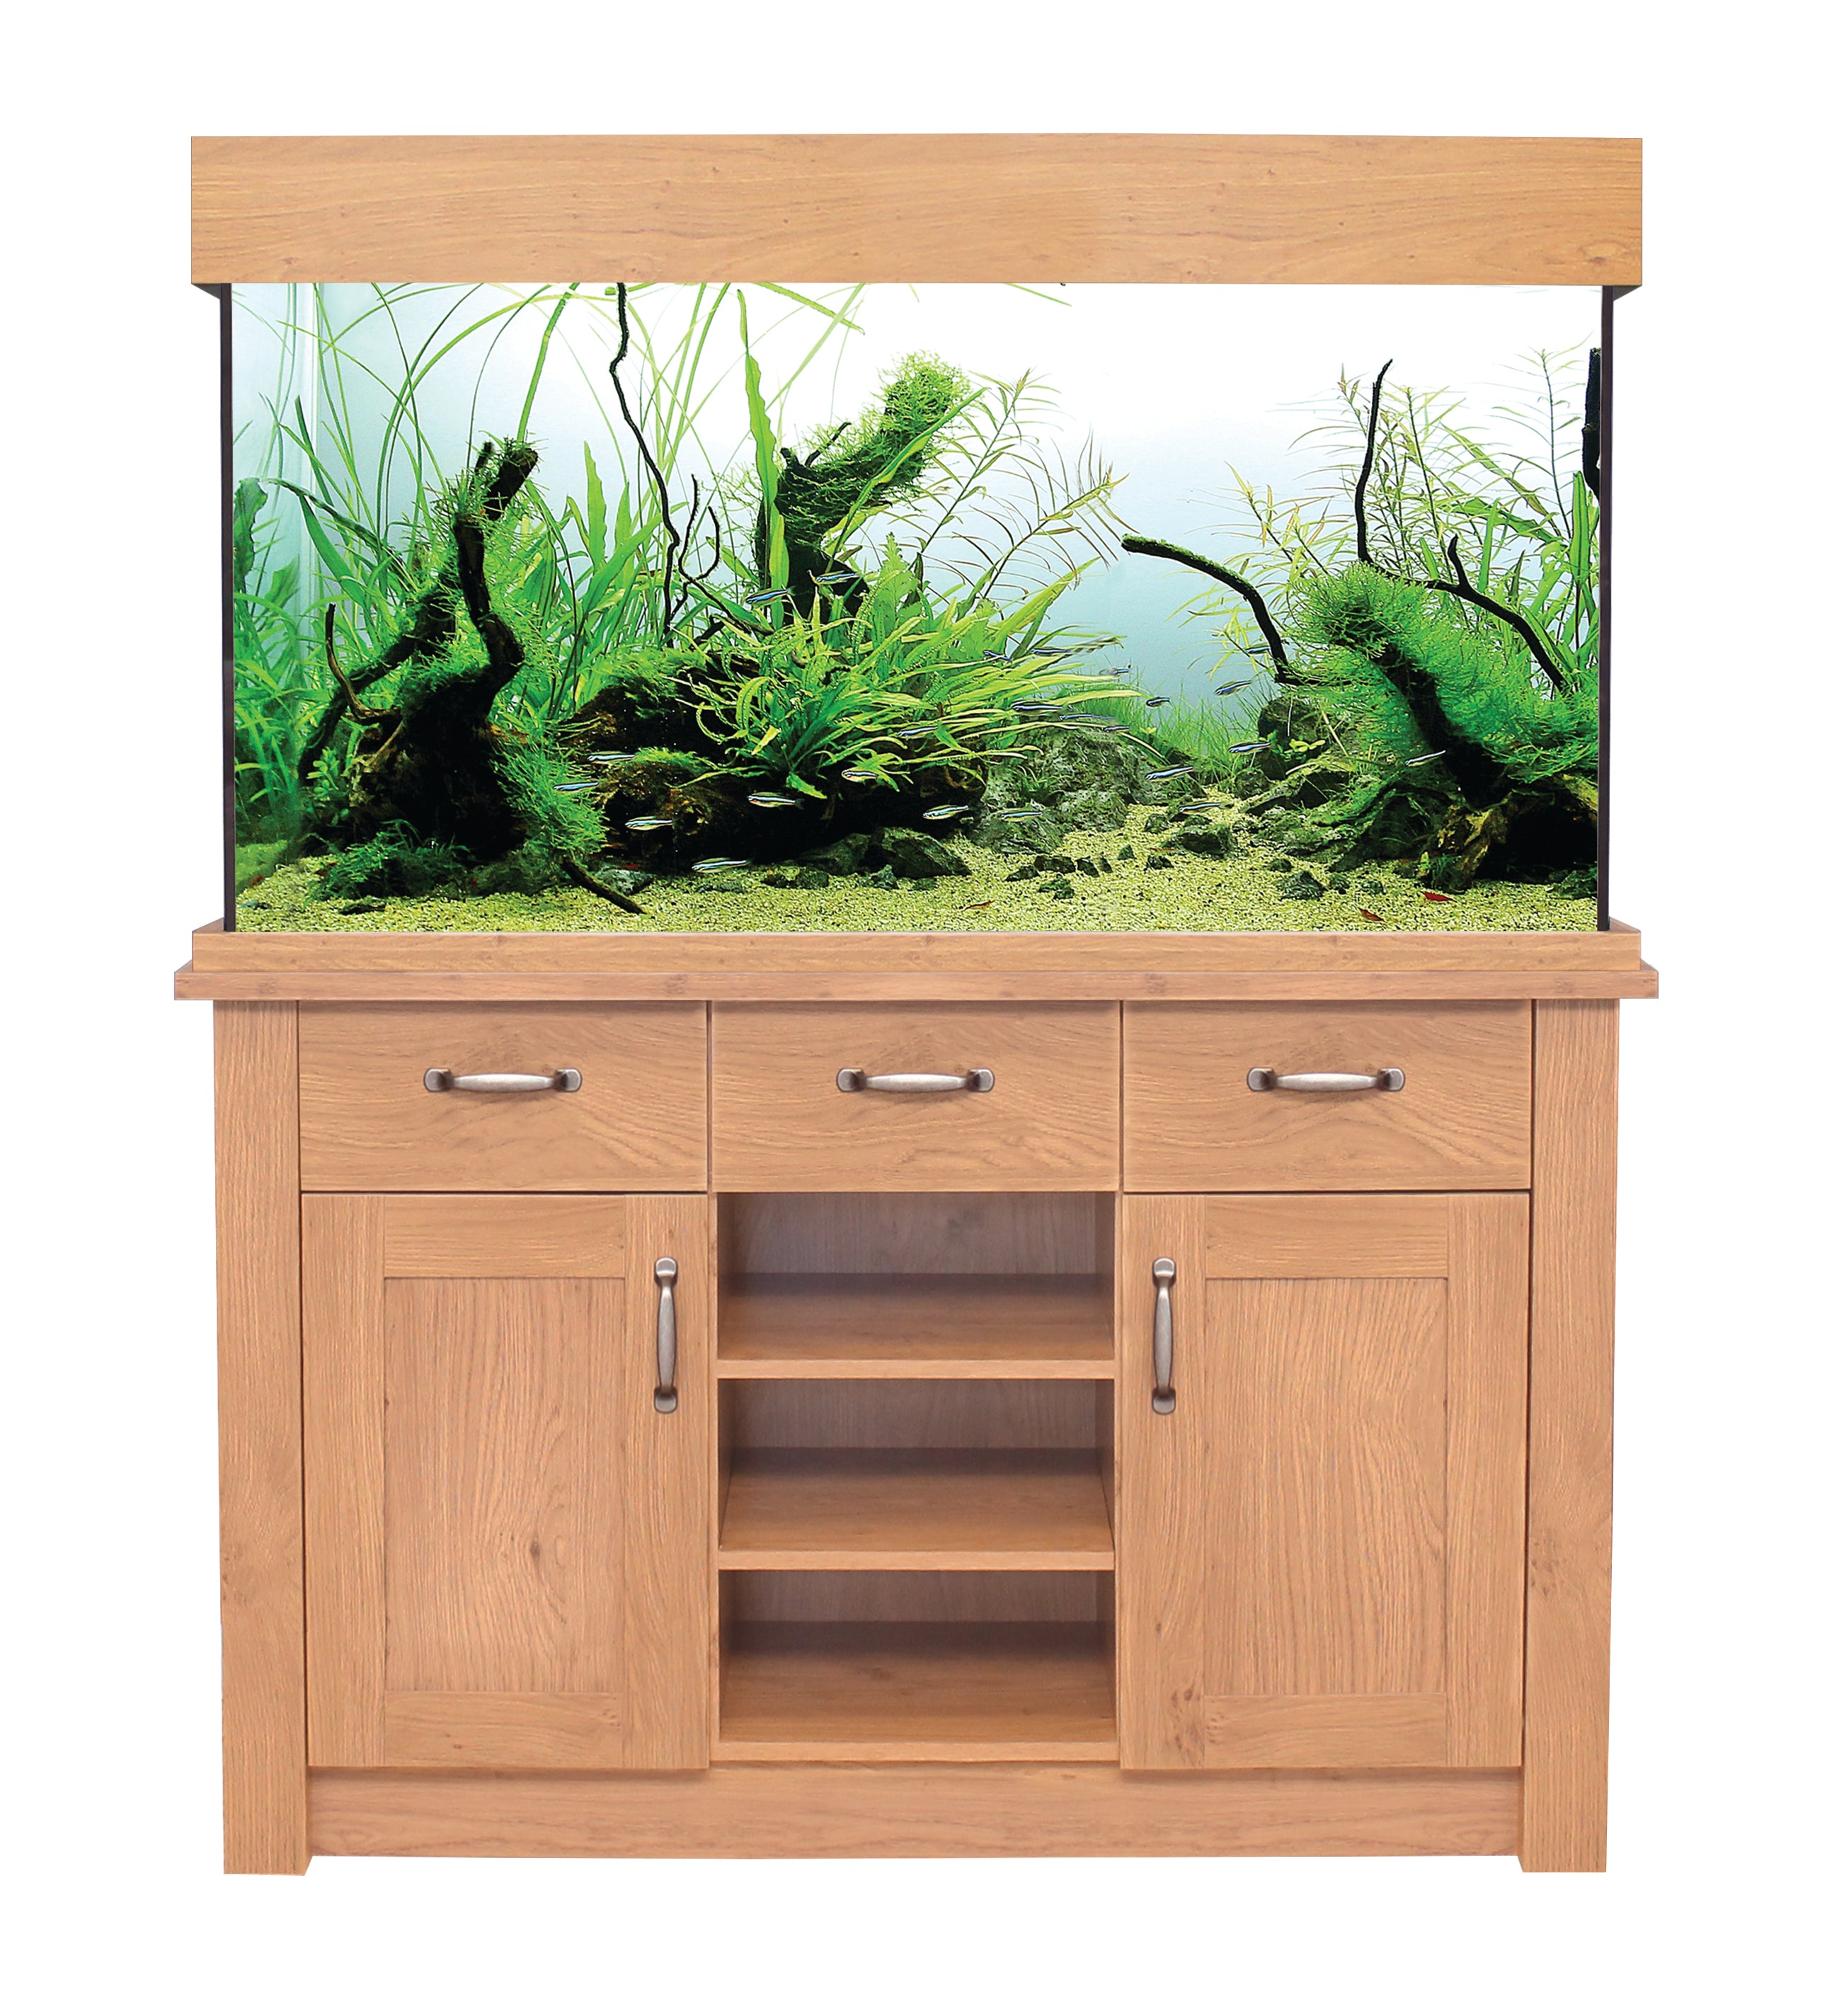 Aqua One OakStyle 230 Aquarium and Cabinet